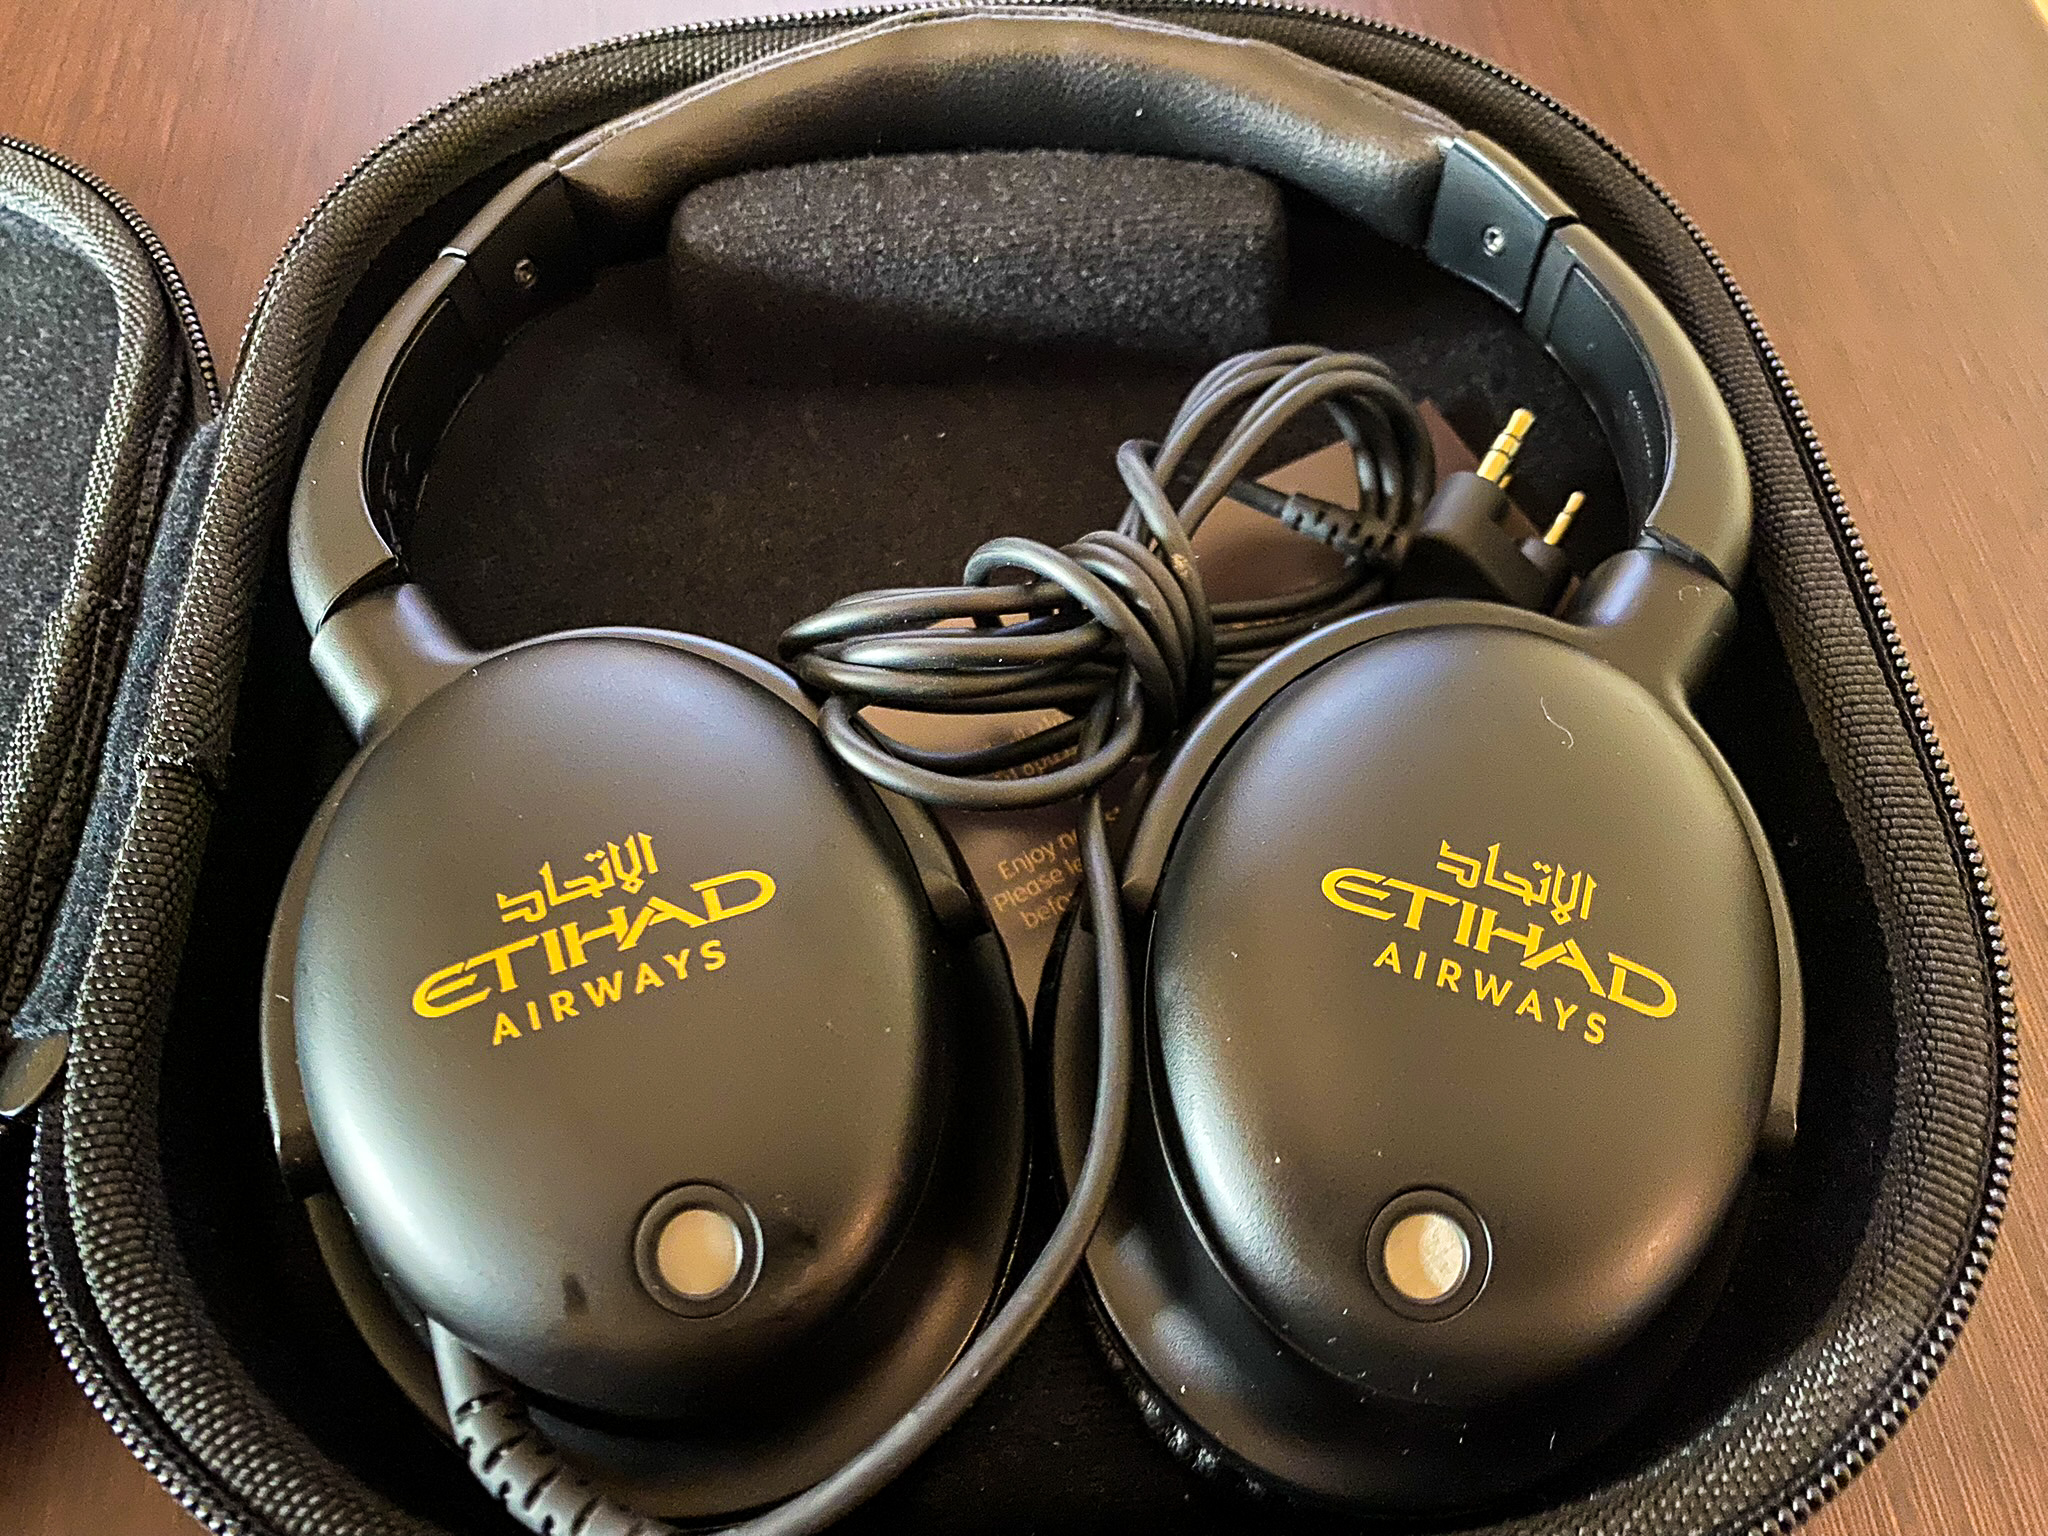 Etihad first class headphones